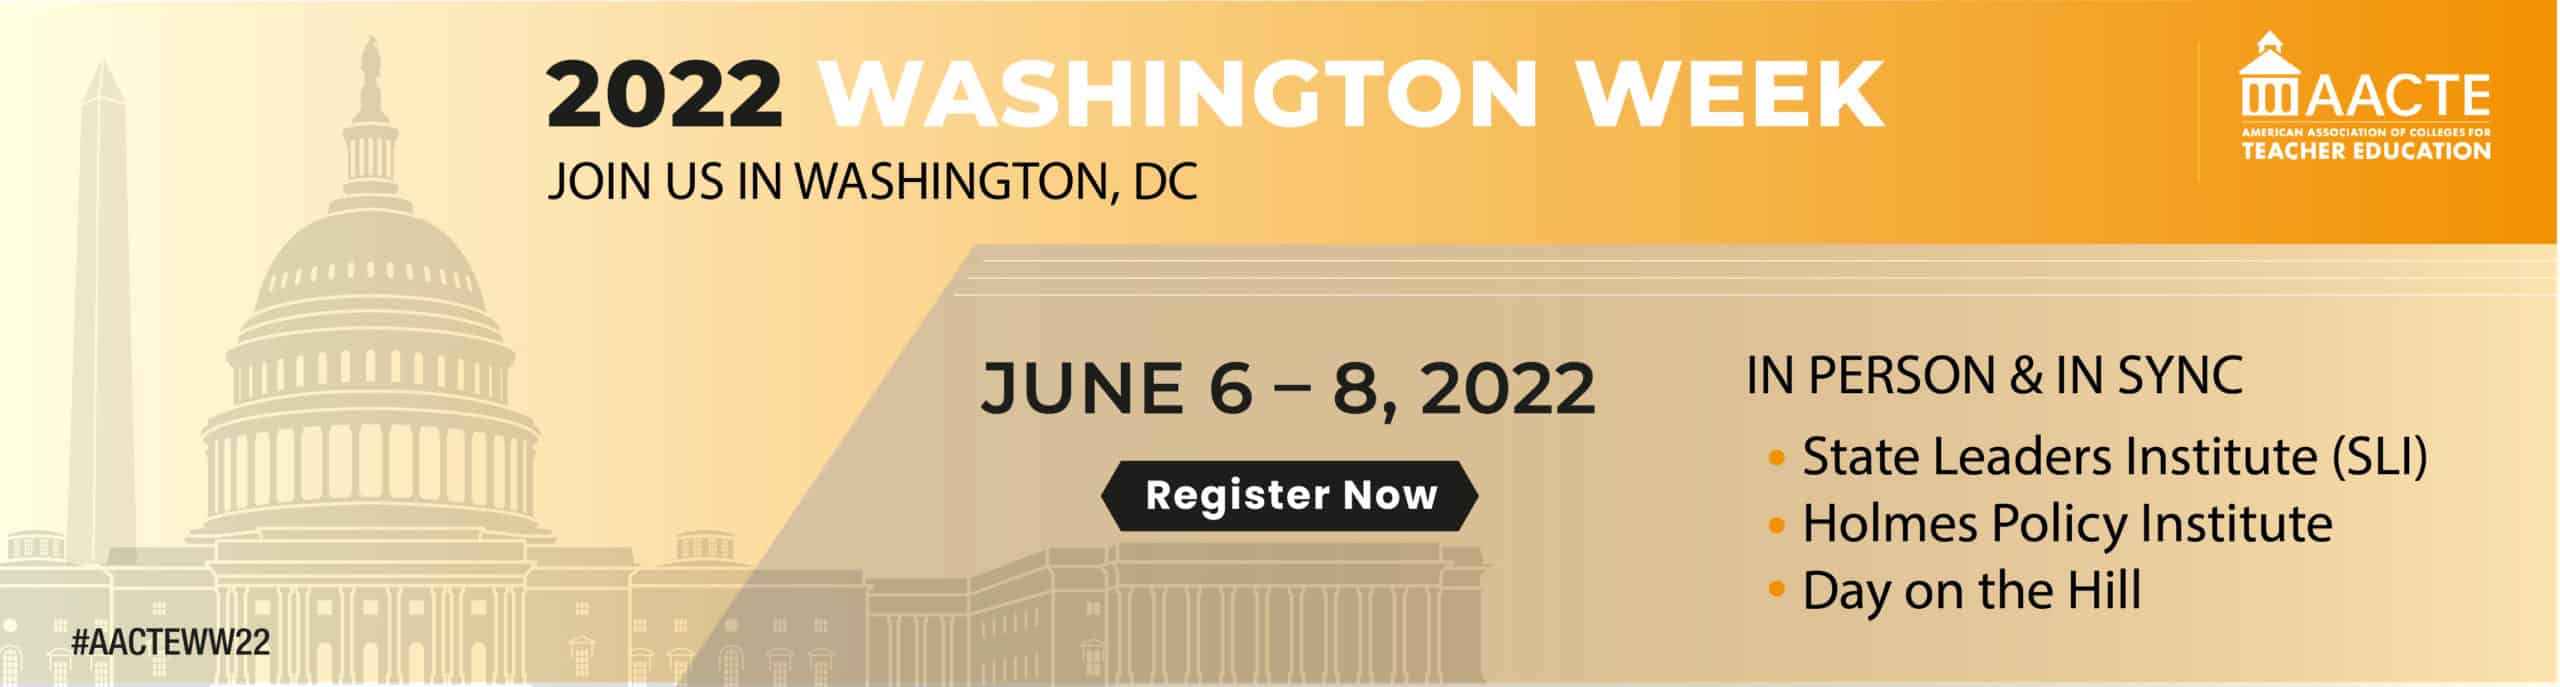 2022 Washington Week - Register Now